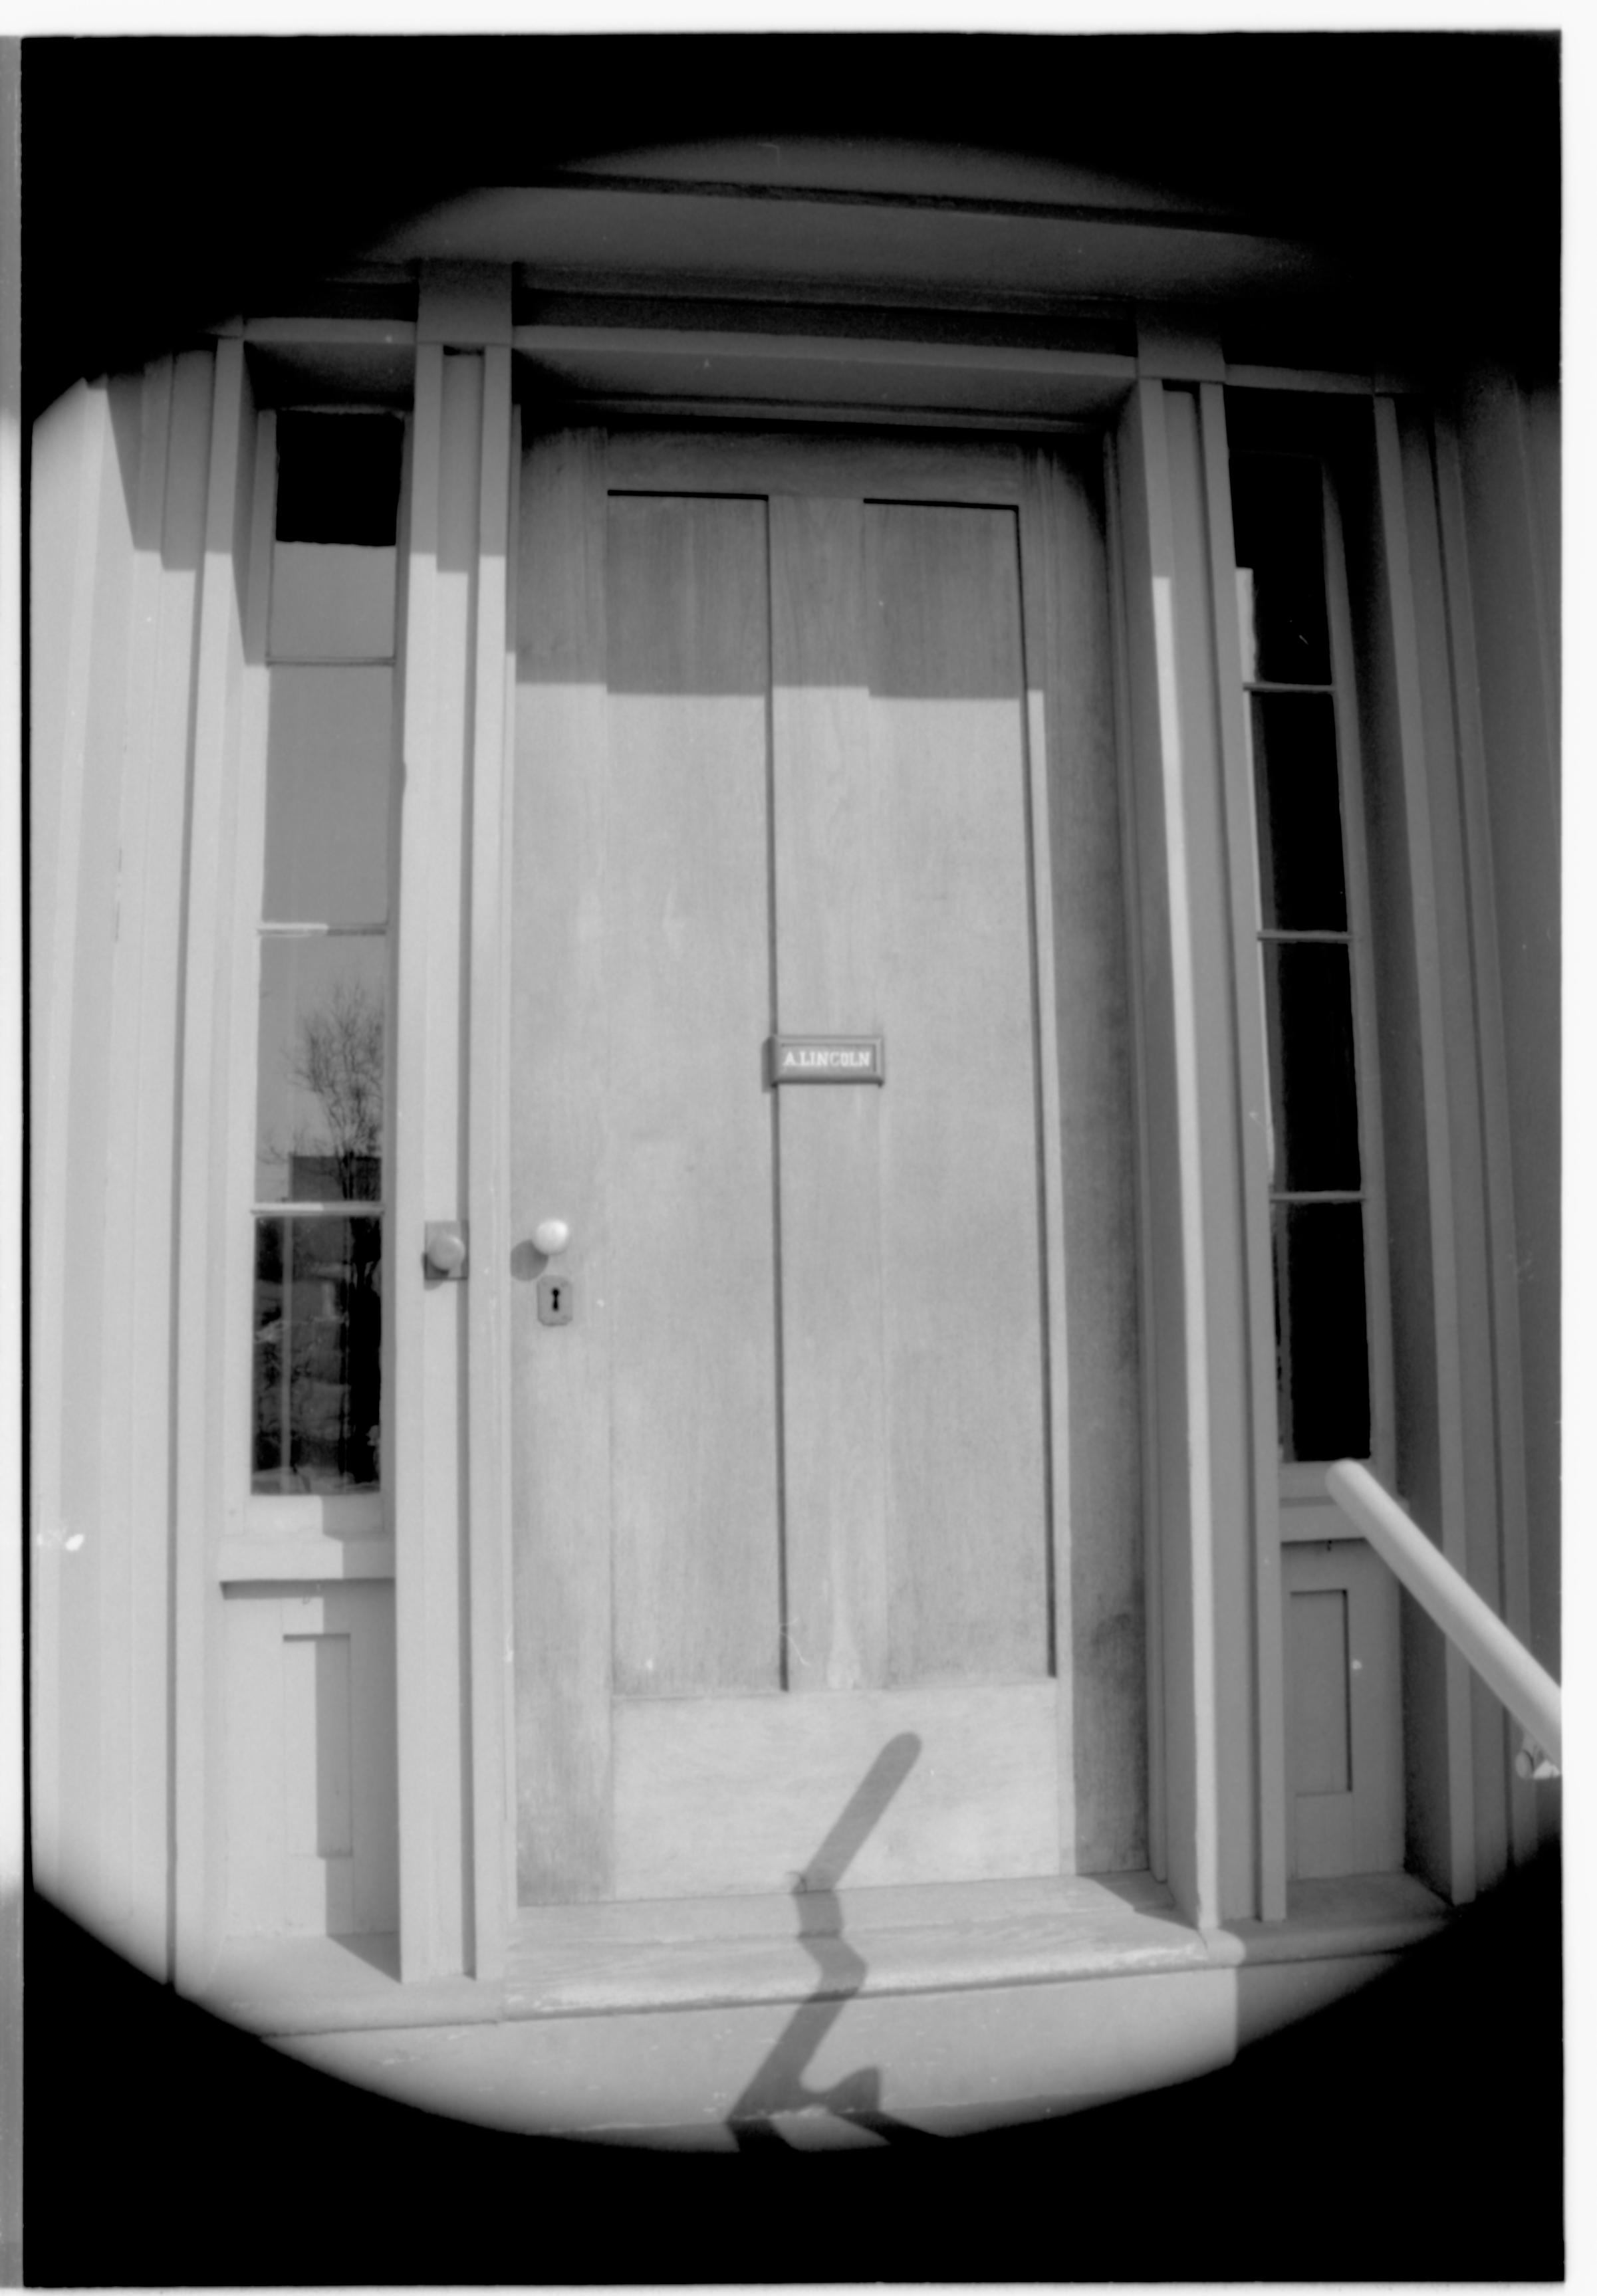 NA details Lincoln, home, details, front door